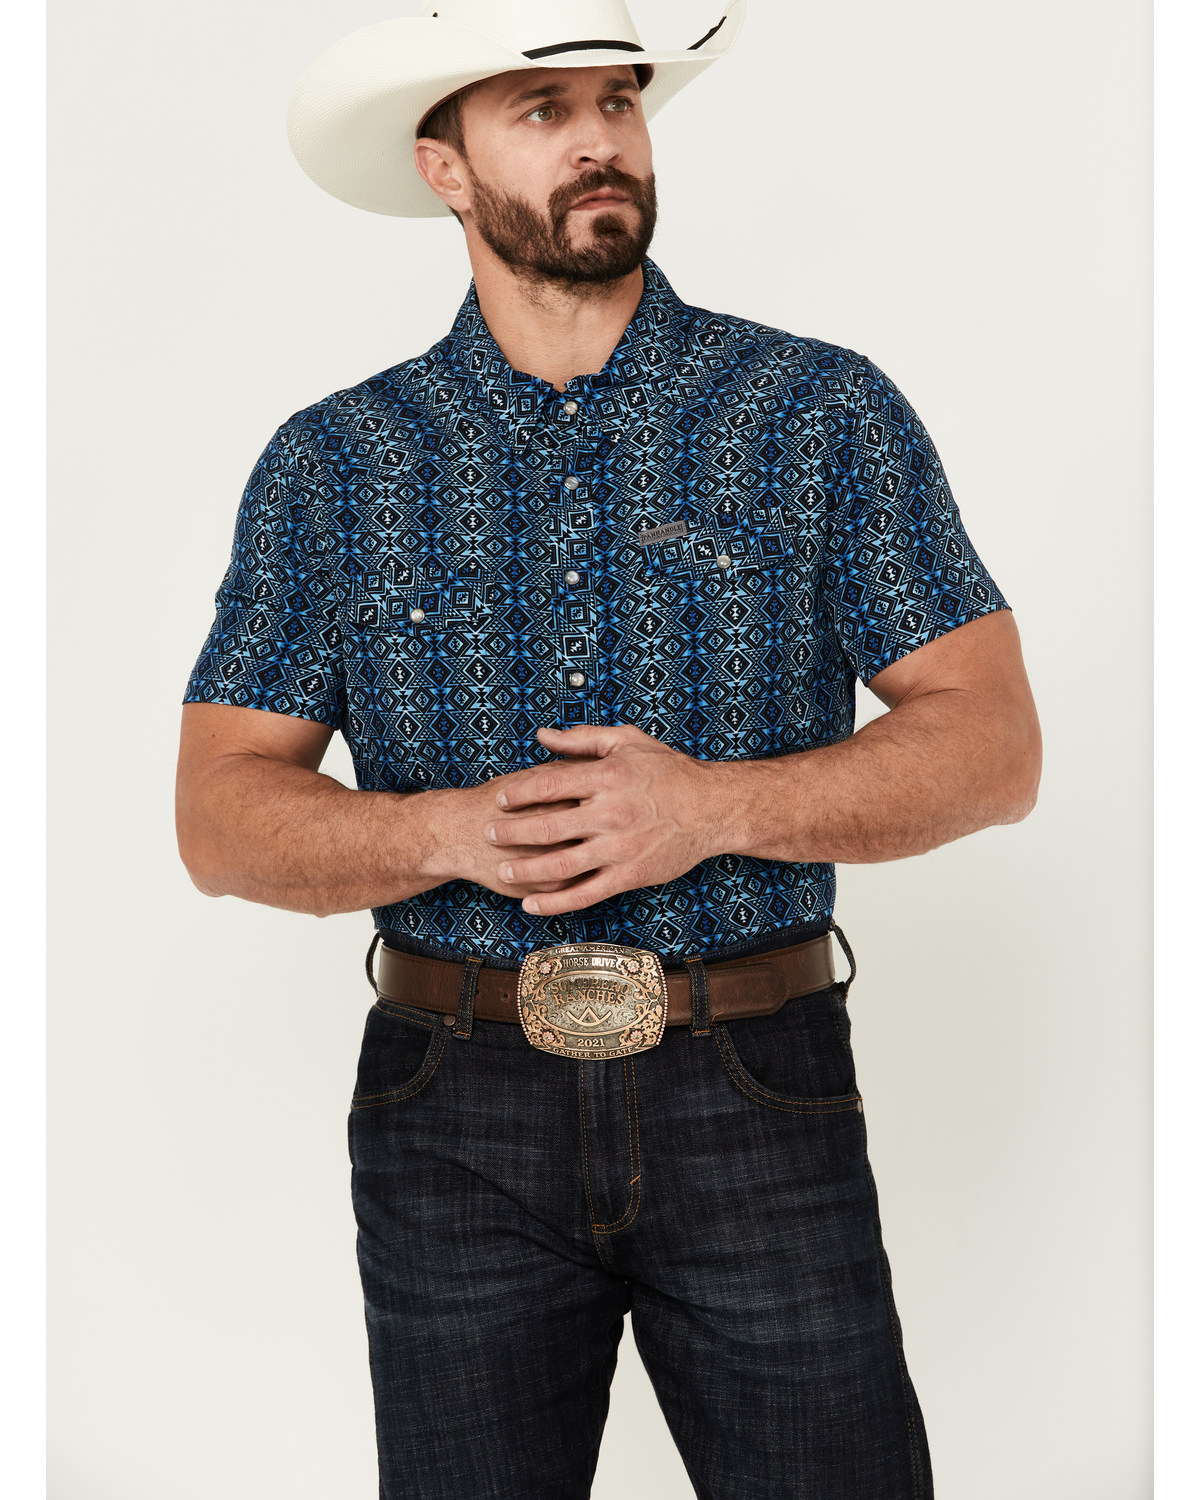 Panhandle Men's Southwestern Print Short Sleeve Pearl Snap Performance Western Shirt